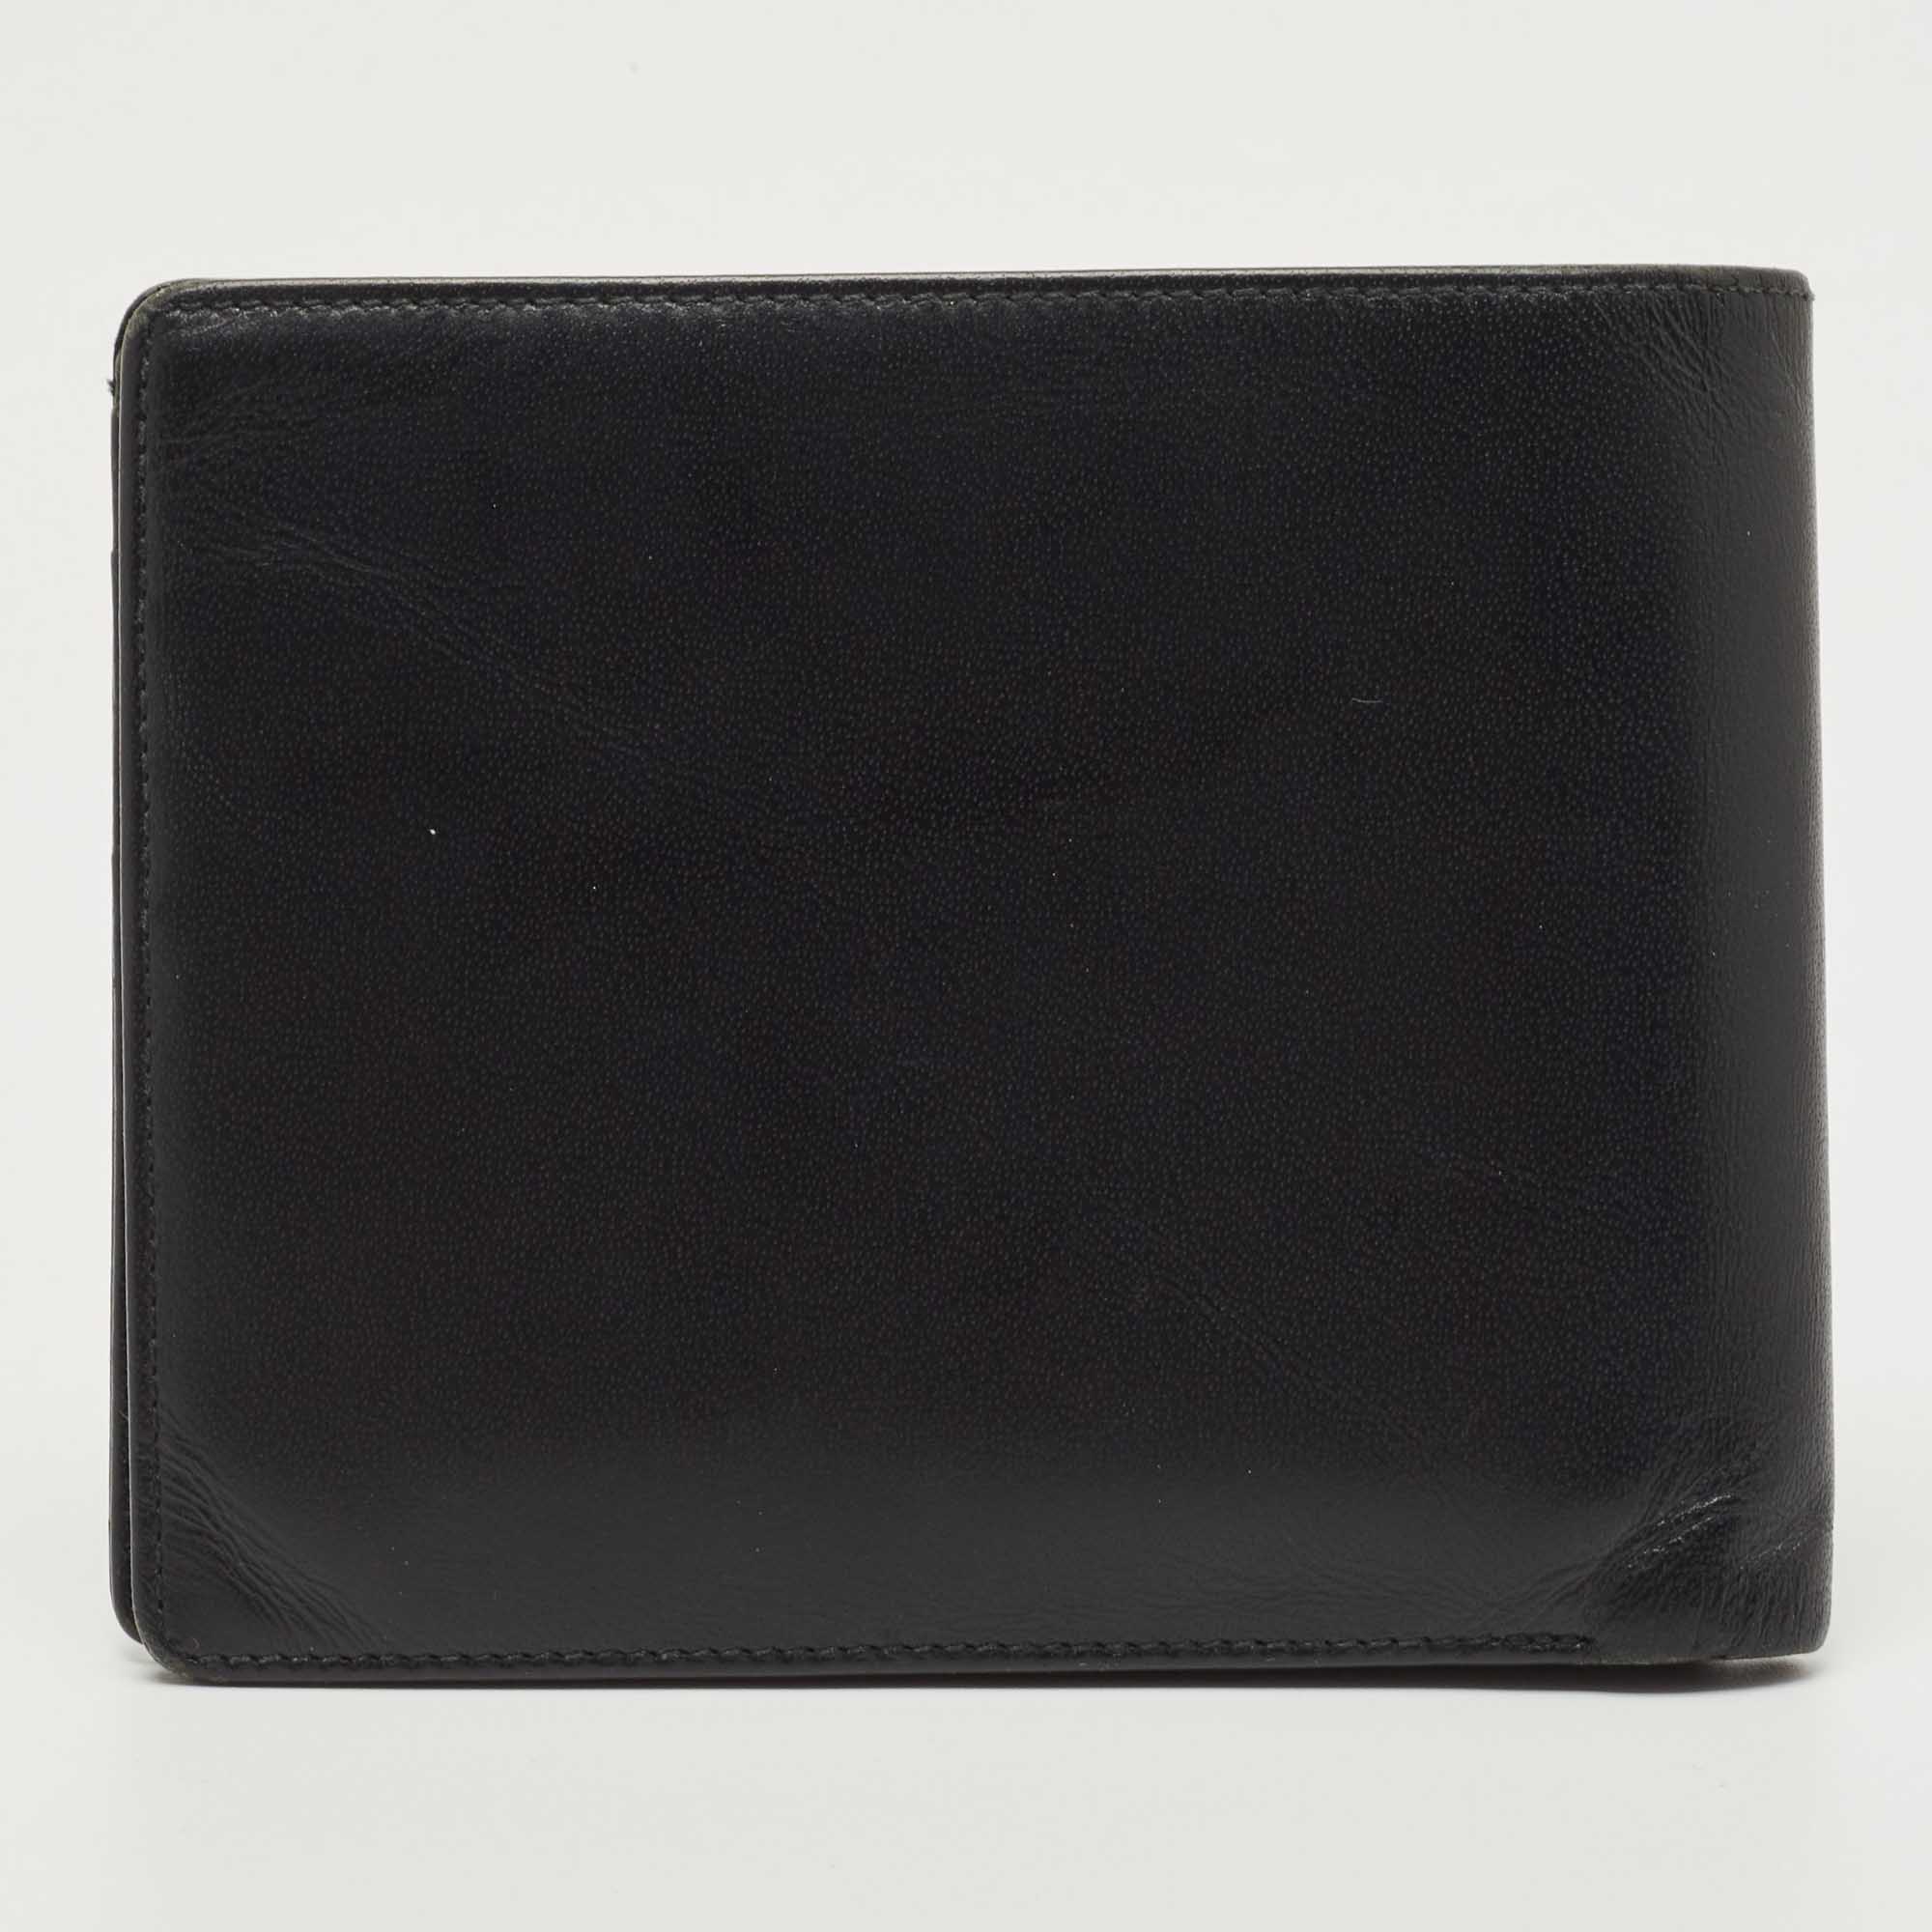 Montblanc Black Leather Miesterstuck Bifold Wallet